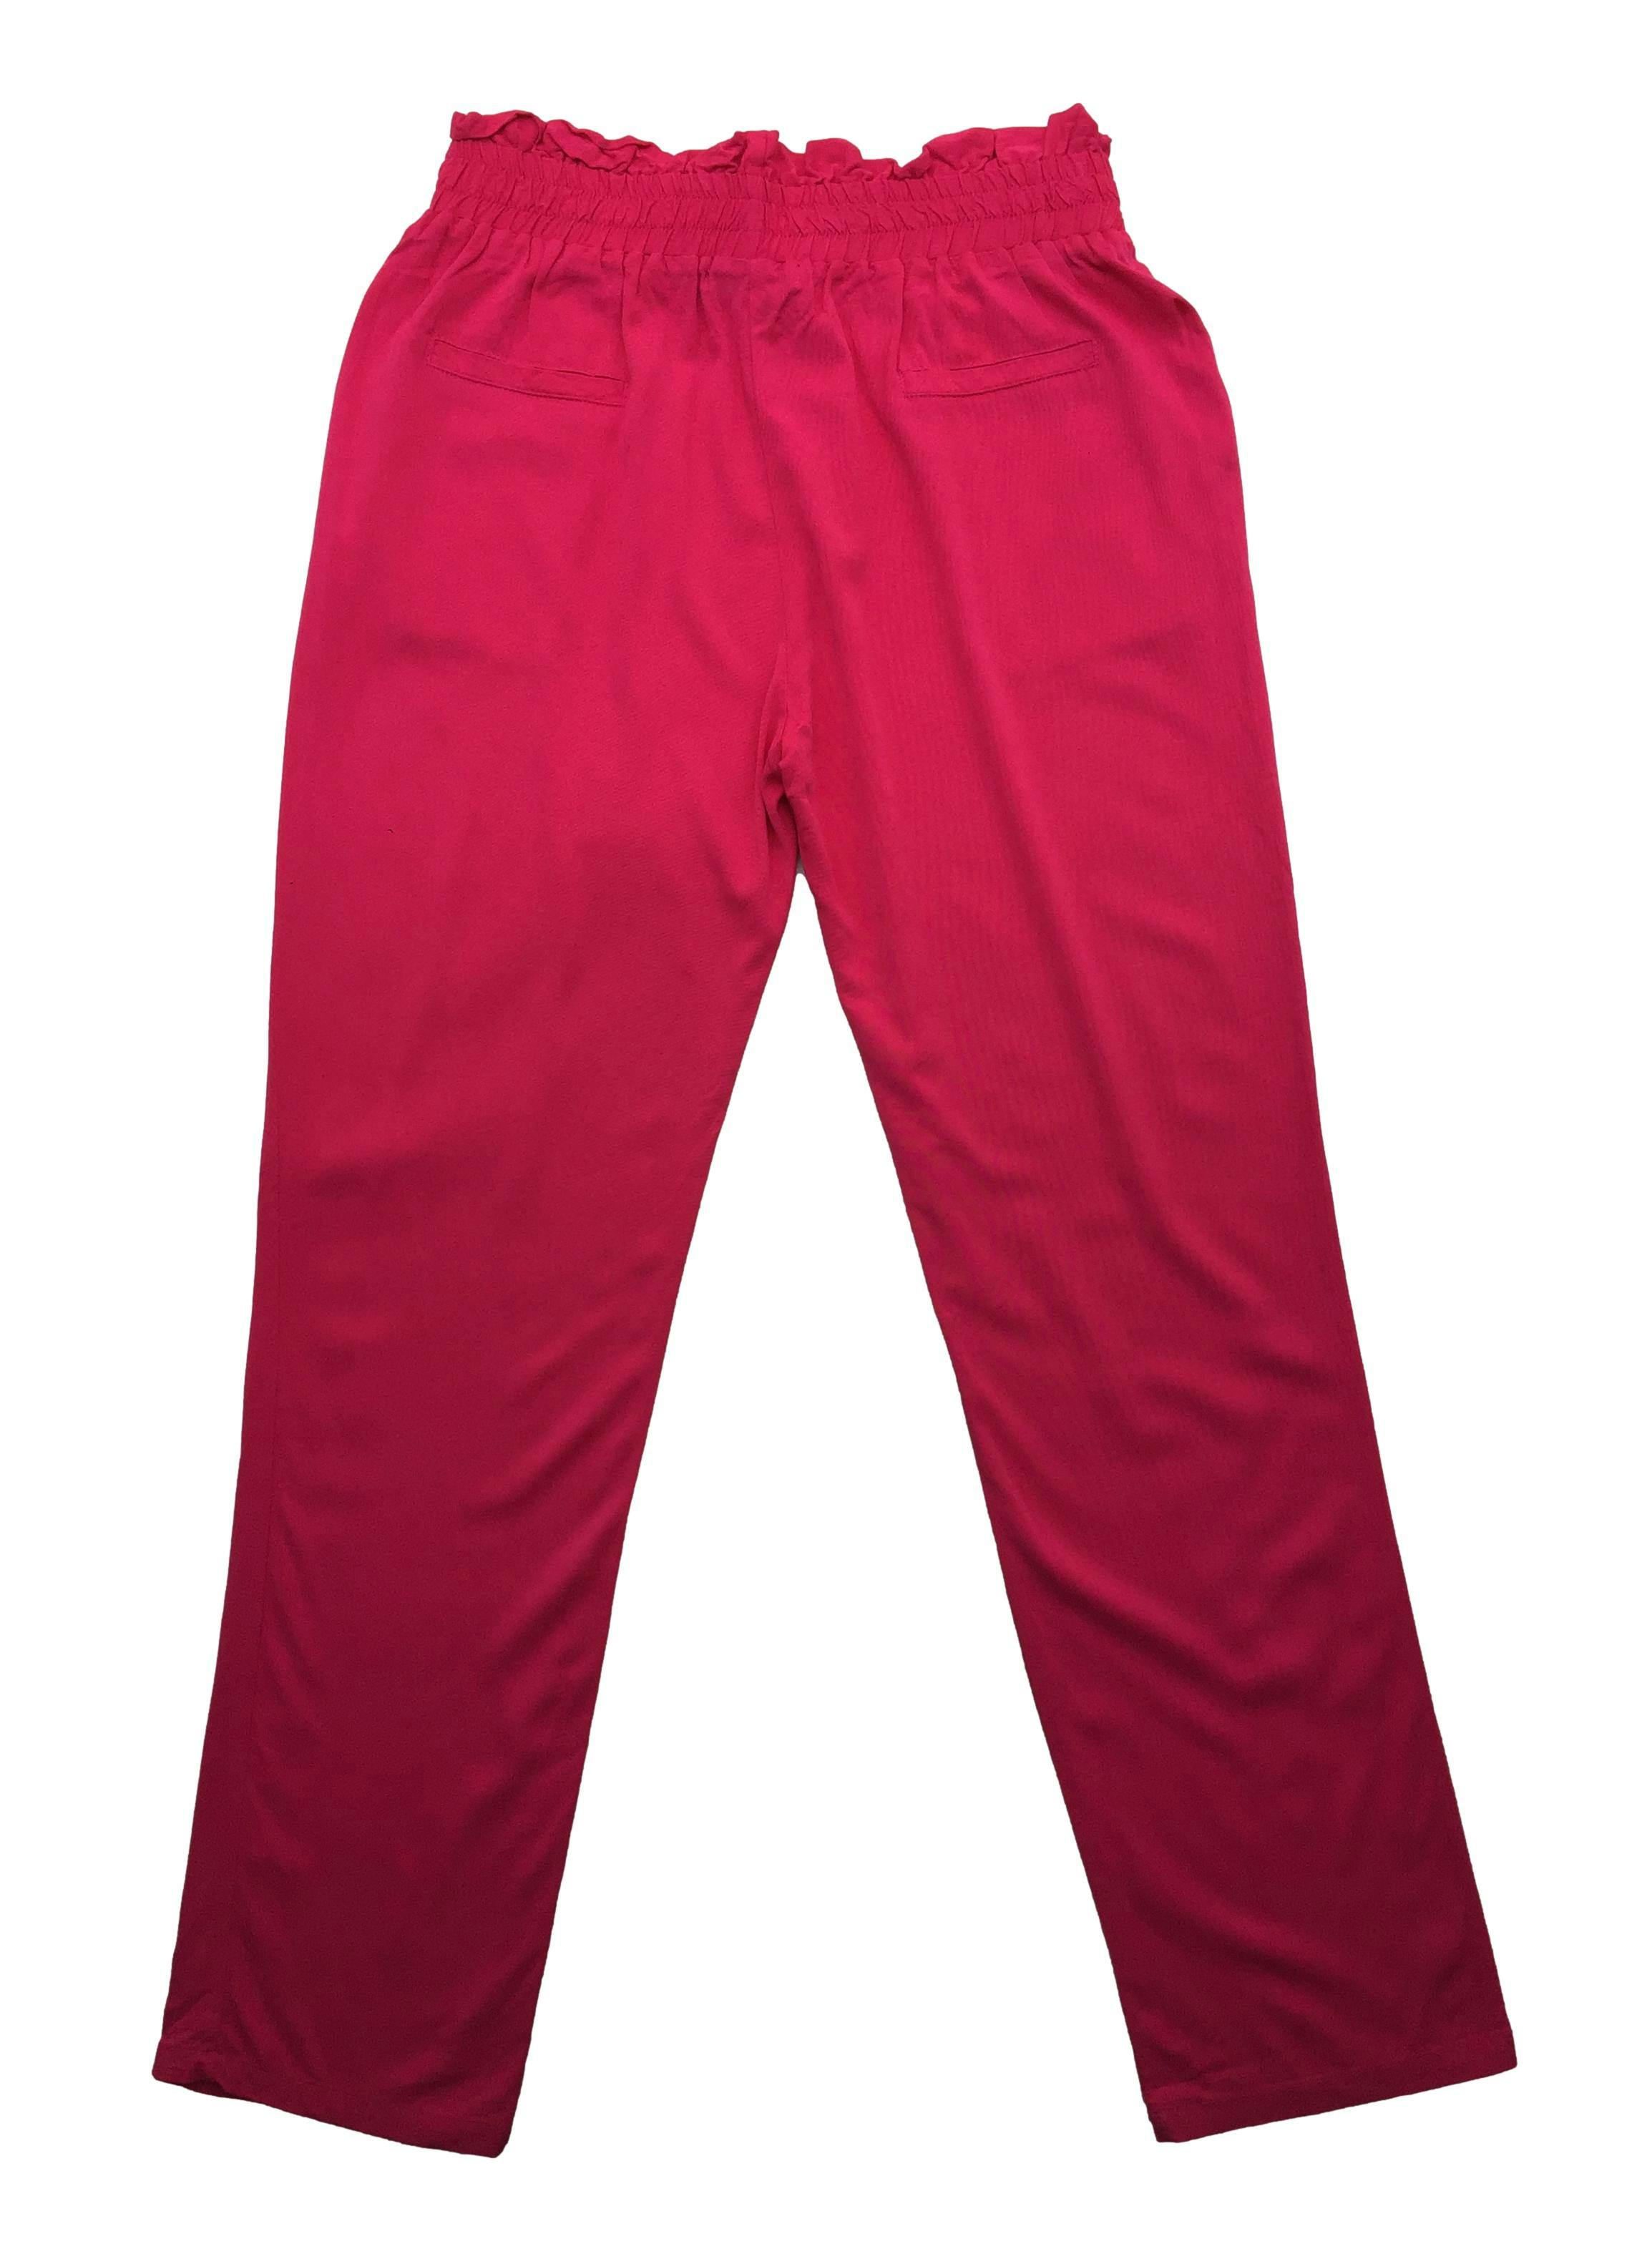 Pantalón Settimana fucsia, tela fresca, pretina y bolsillos laterales. Cintura 68cm Tiro 28cm Largo 92cm